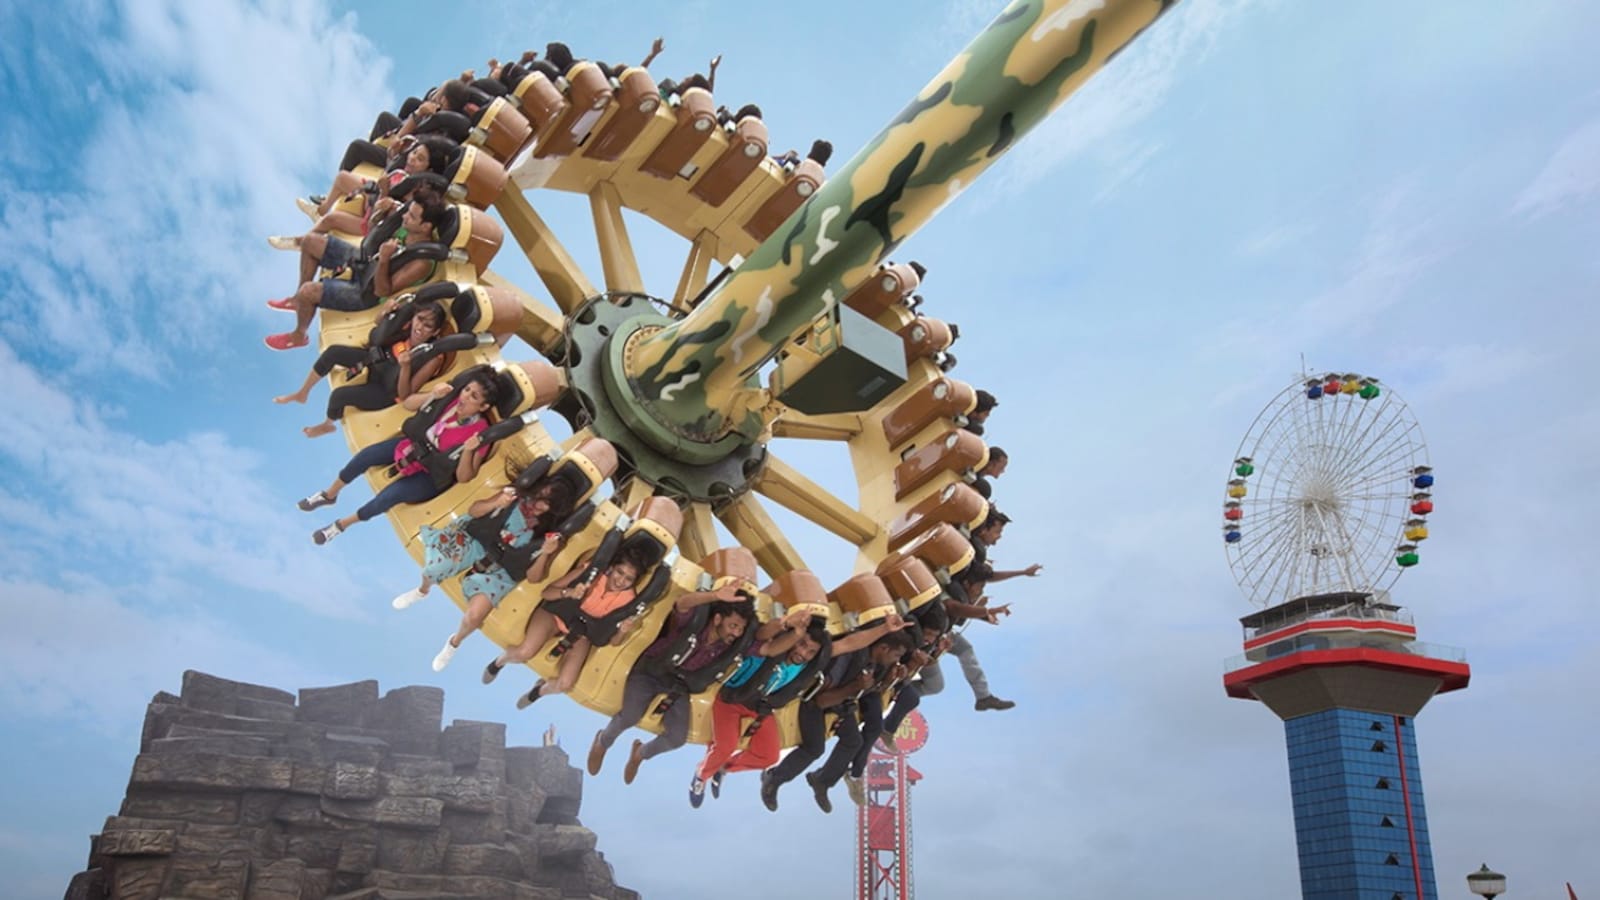 Wonderla, Imagicaa script a turnaround as theme parks experience a revival